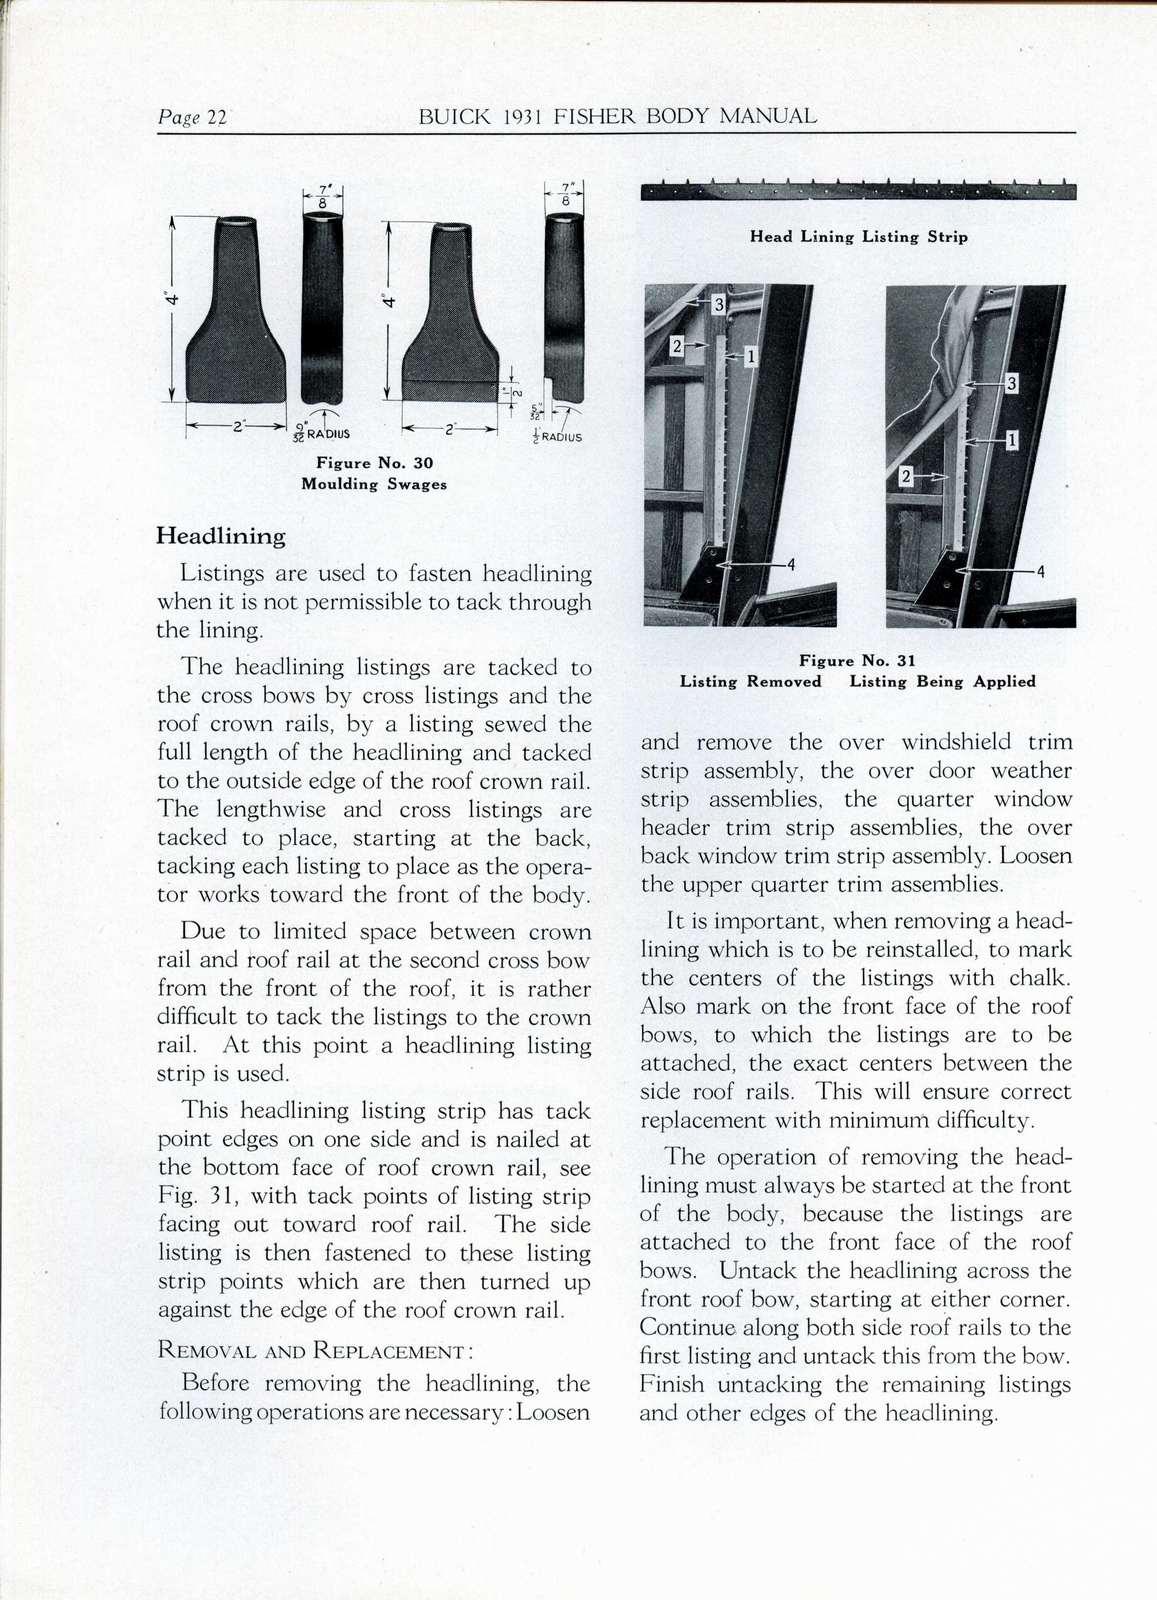 n_1931 Buick Fisher Body Manual-22.jpg